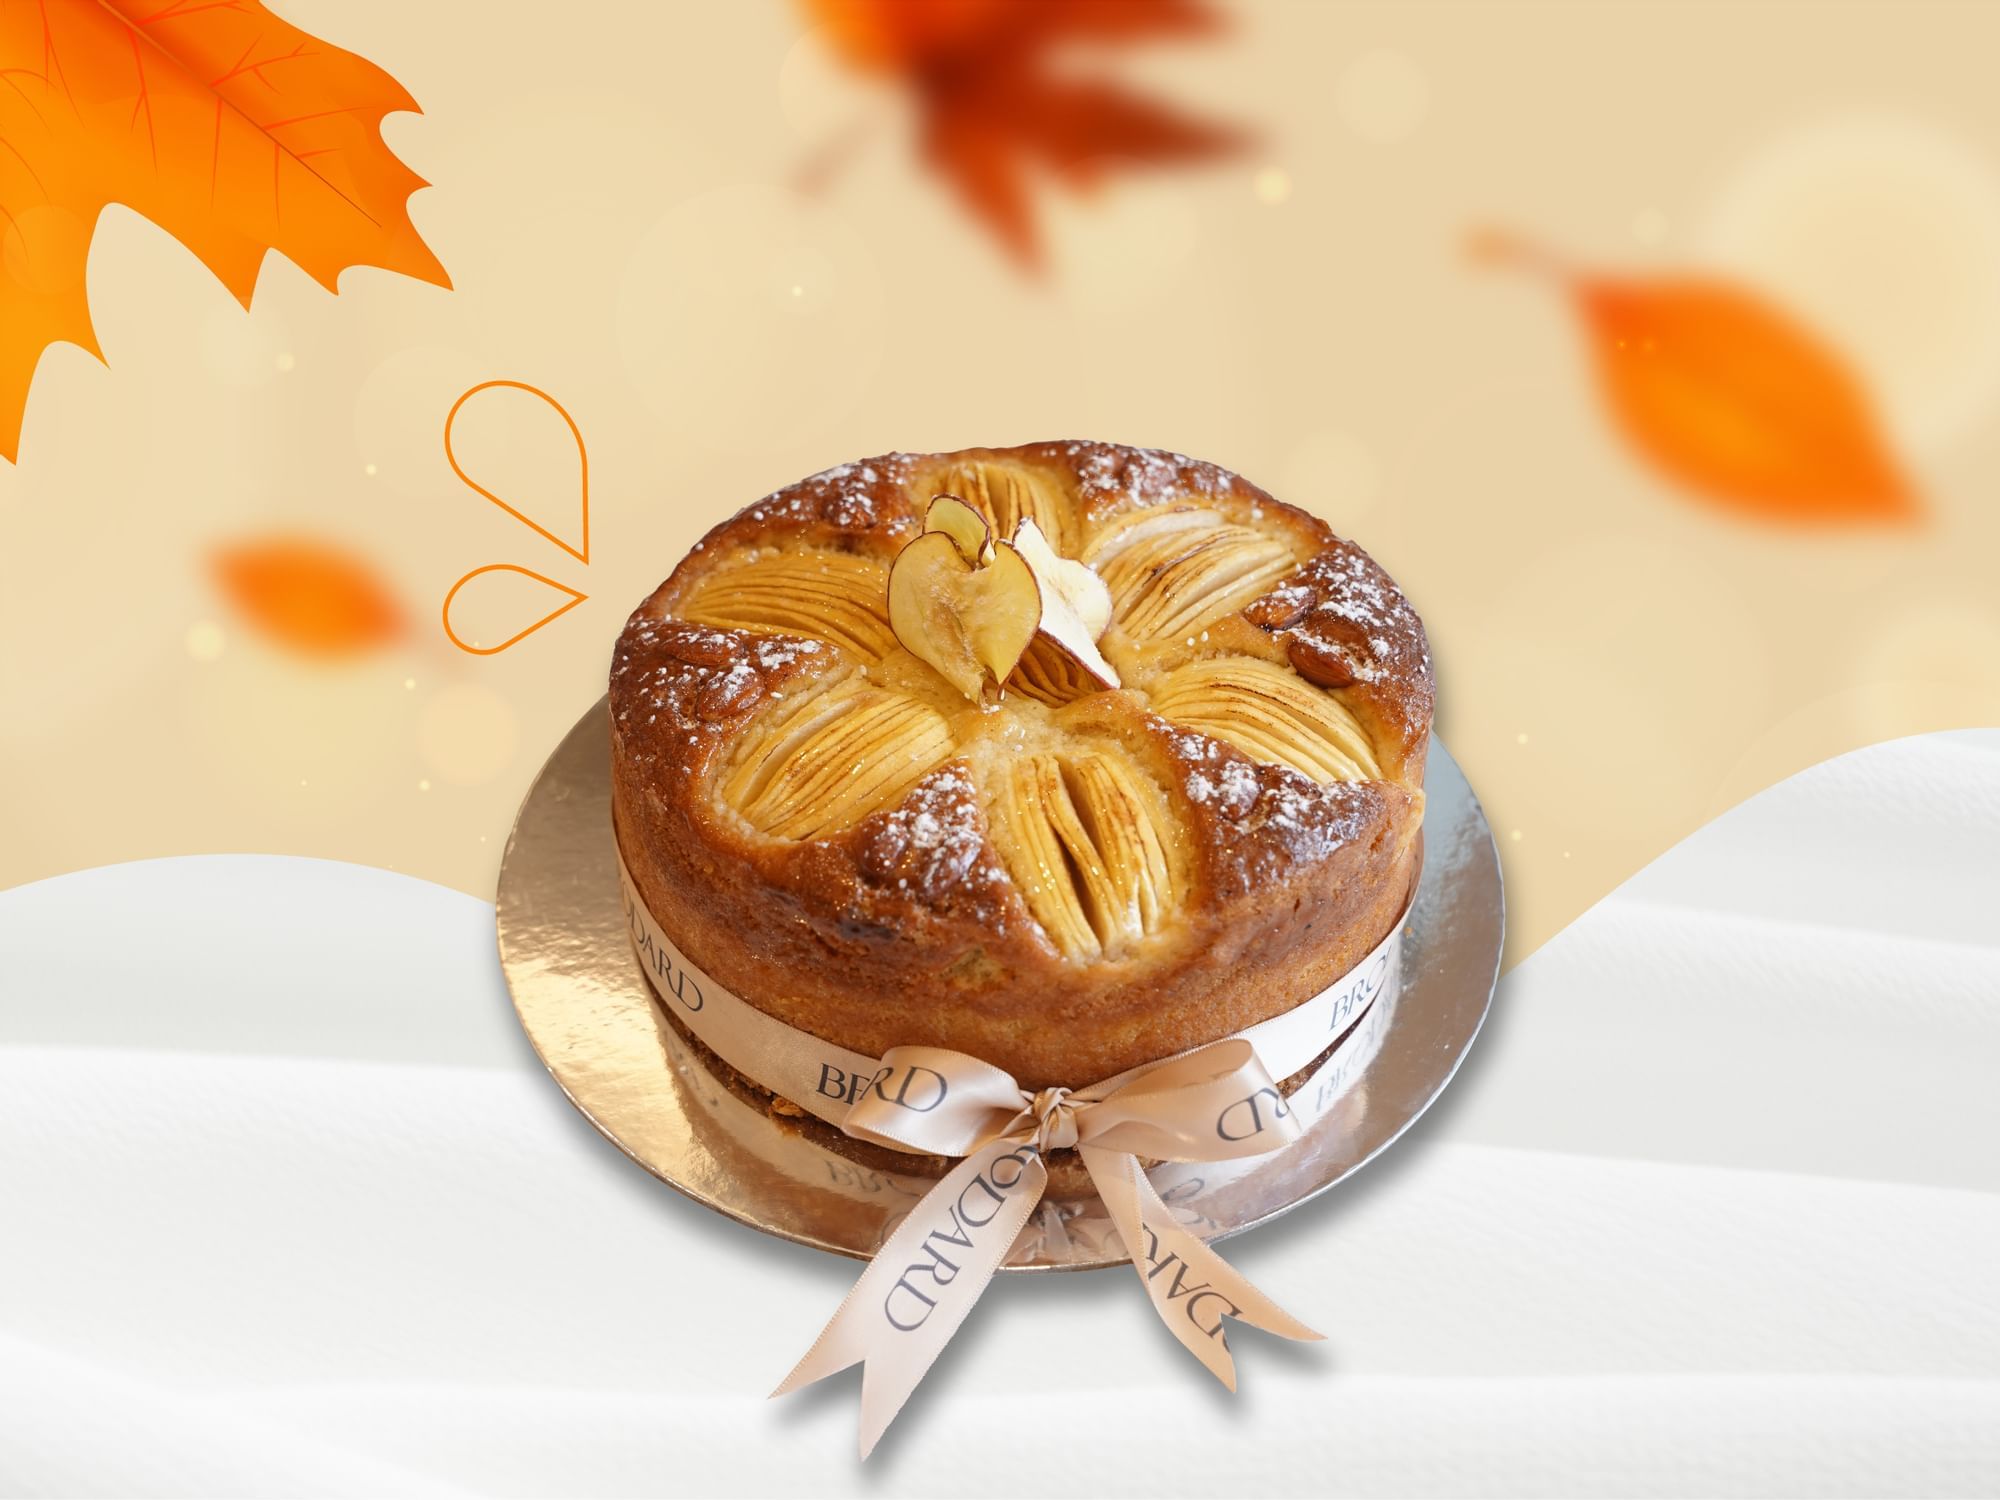 Apple cake brings an early taste of autumn